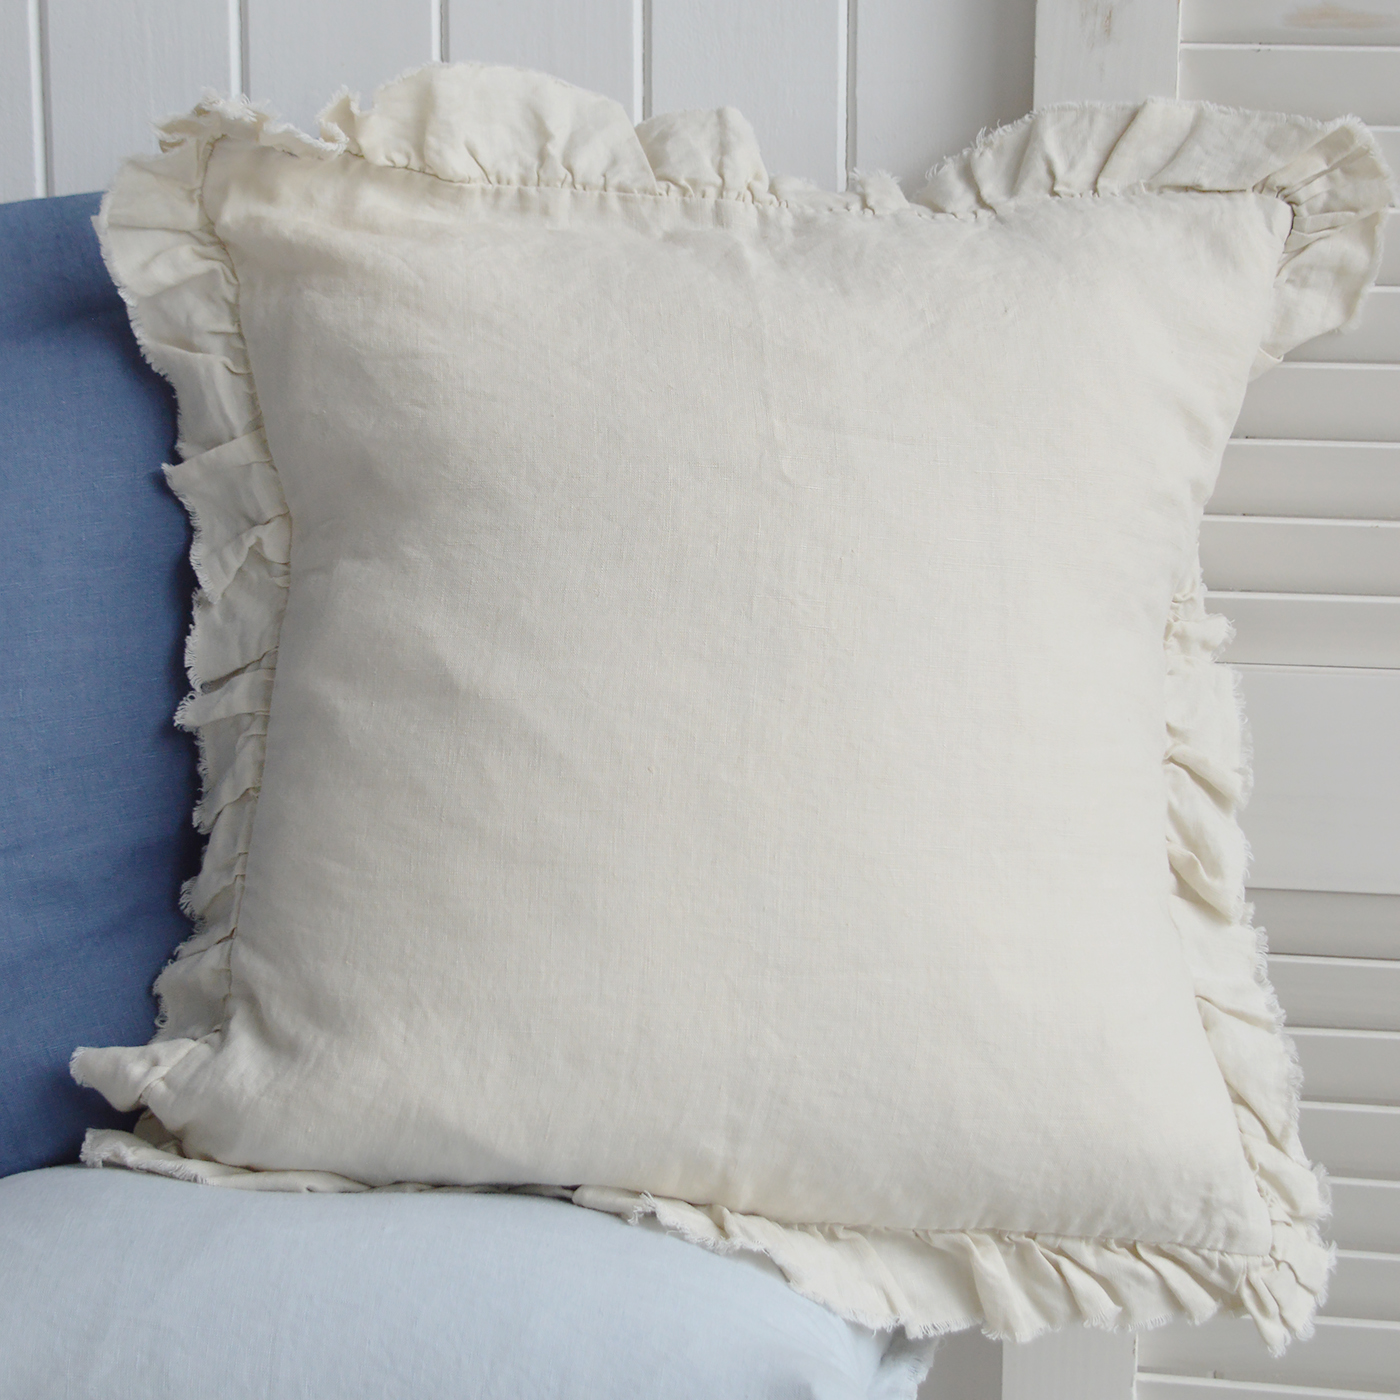 New England cushions and soft furnishings. Hamilton 100% Linen Cushion Covers for coastal, beach house and modern farmhouse interiors - cream ruffle